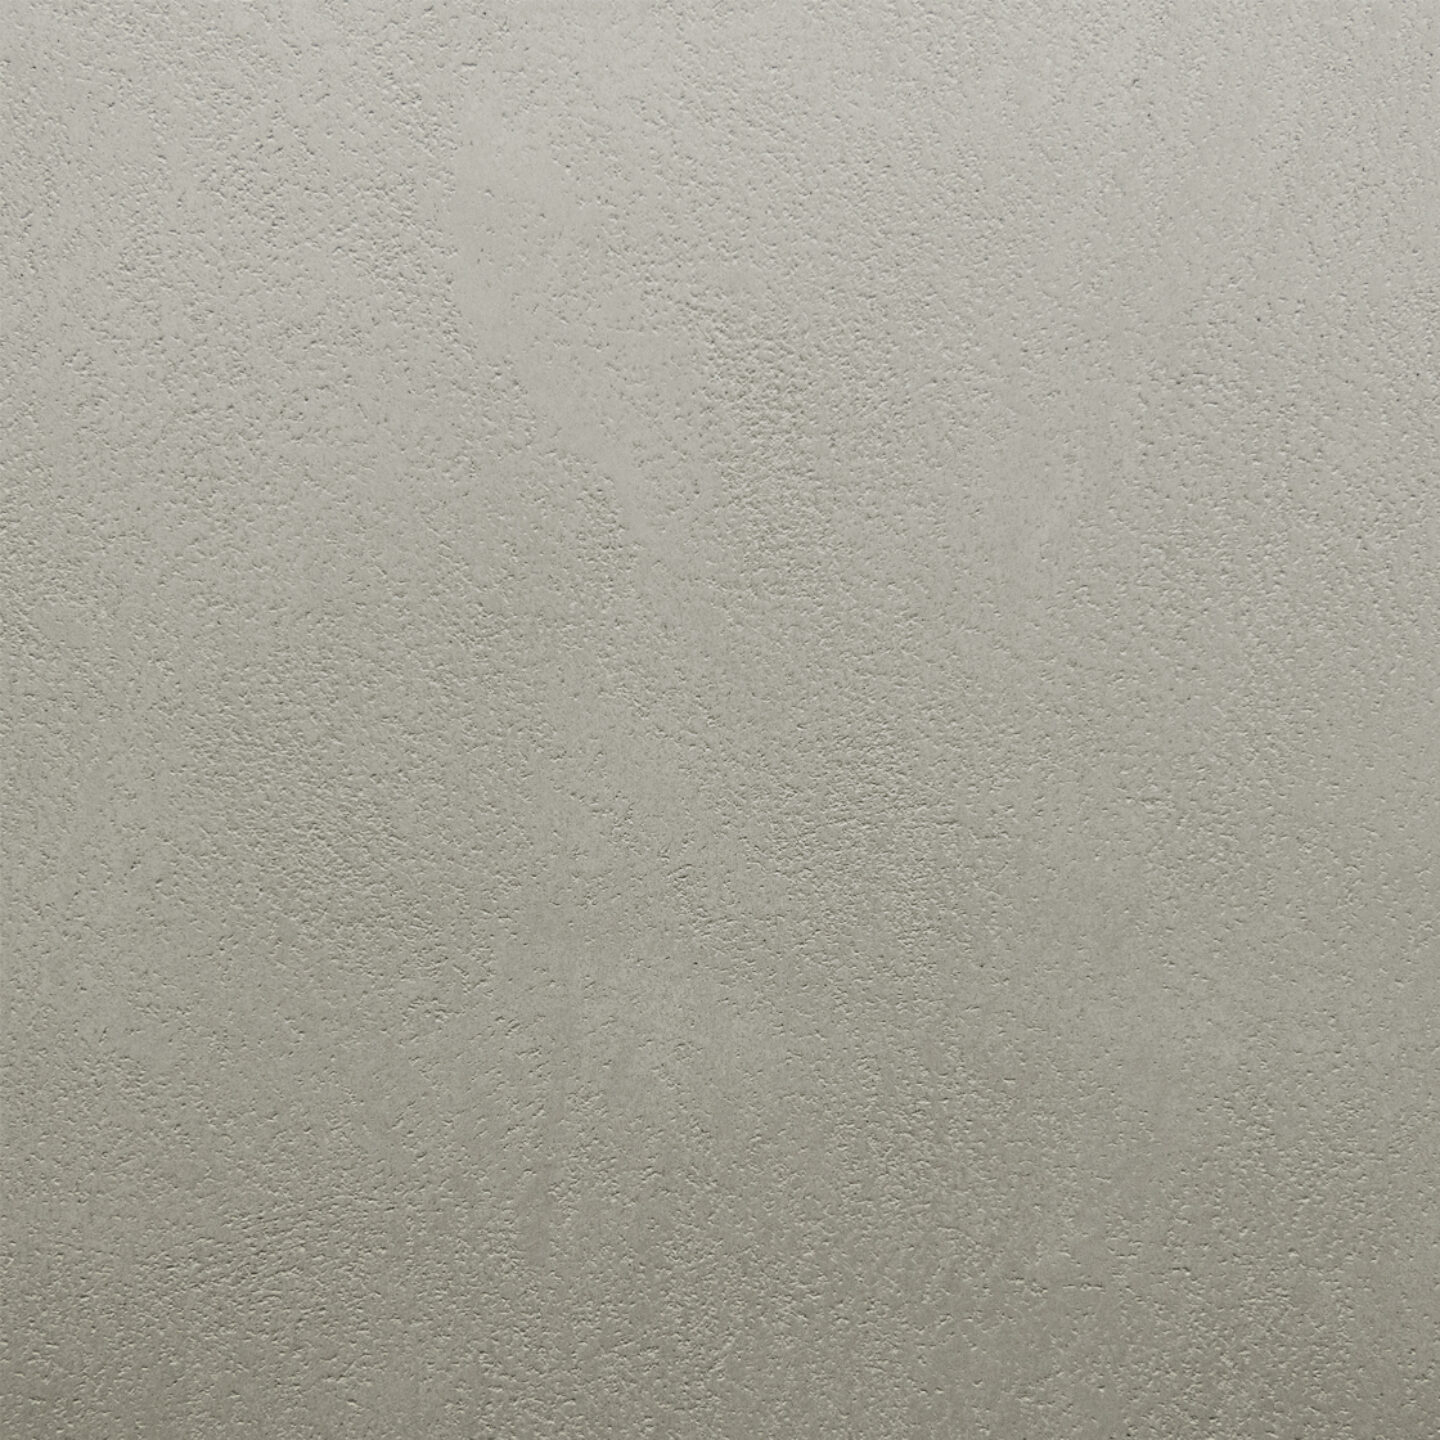 Close up of Armourcoat leatherstone exterior polished plaster finish - 12